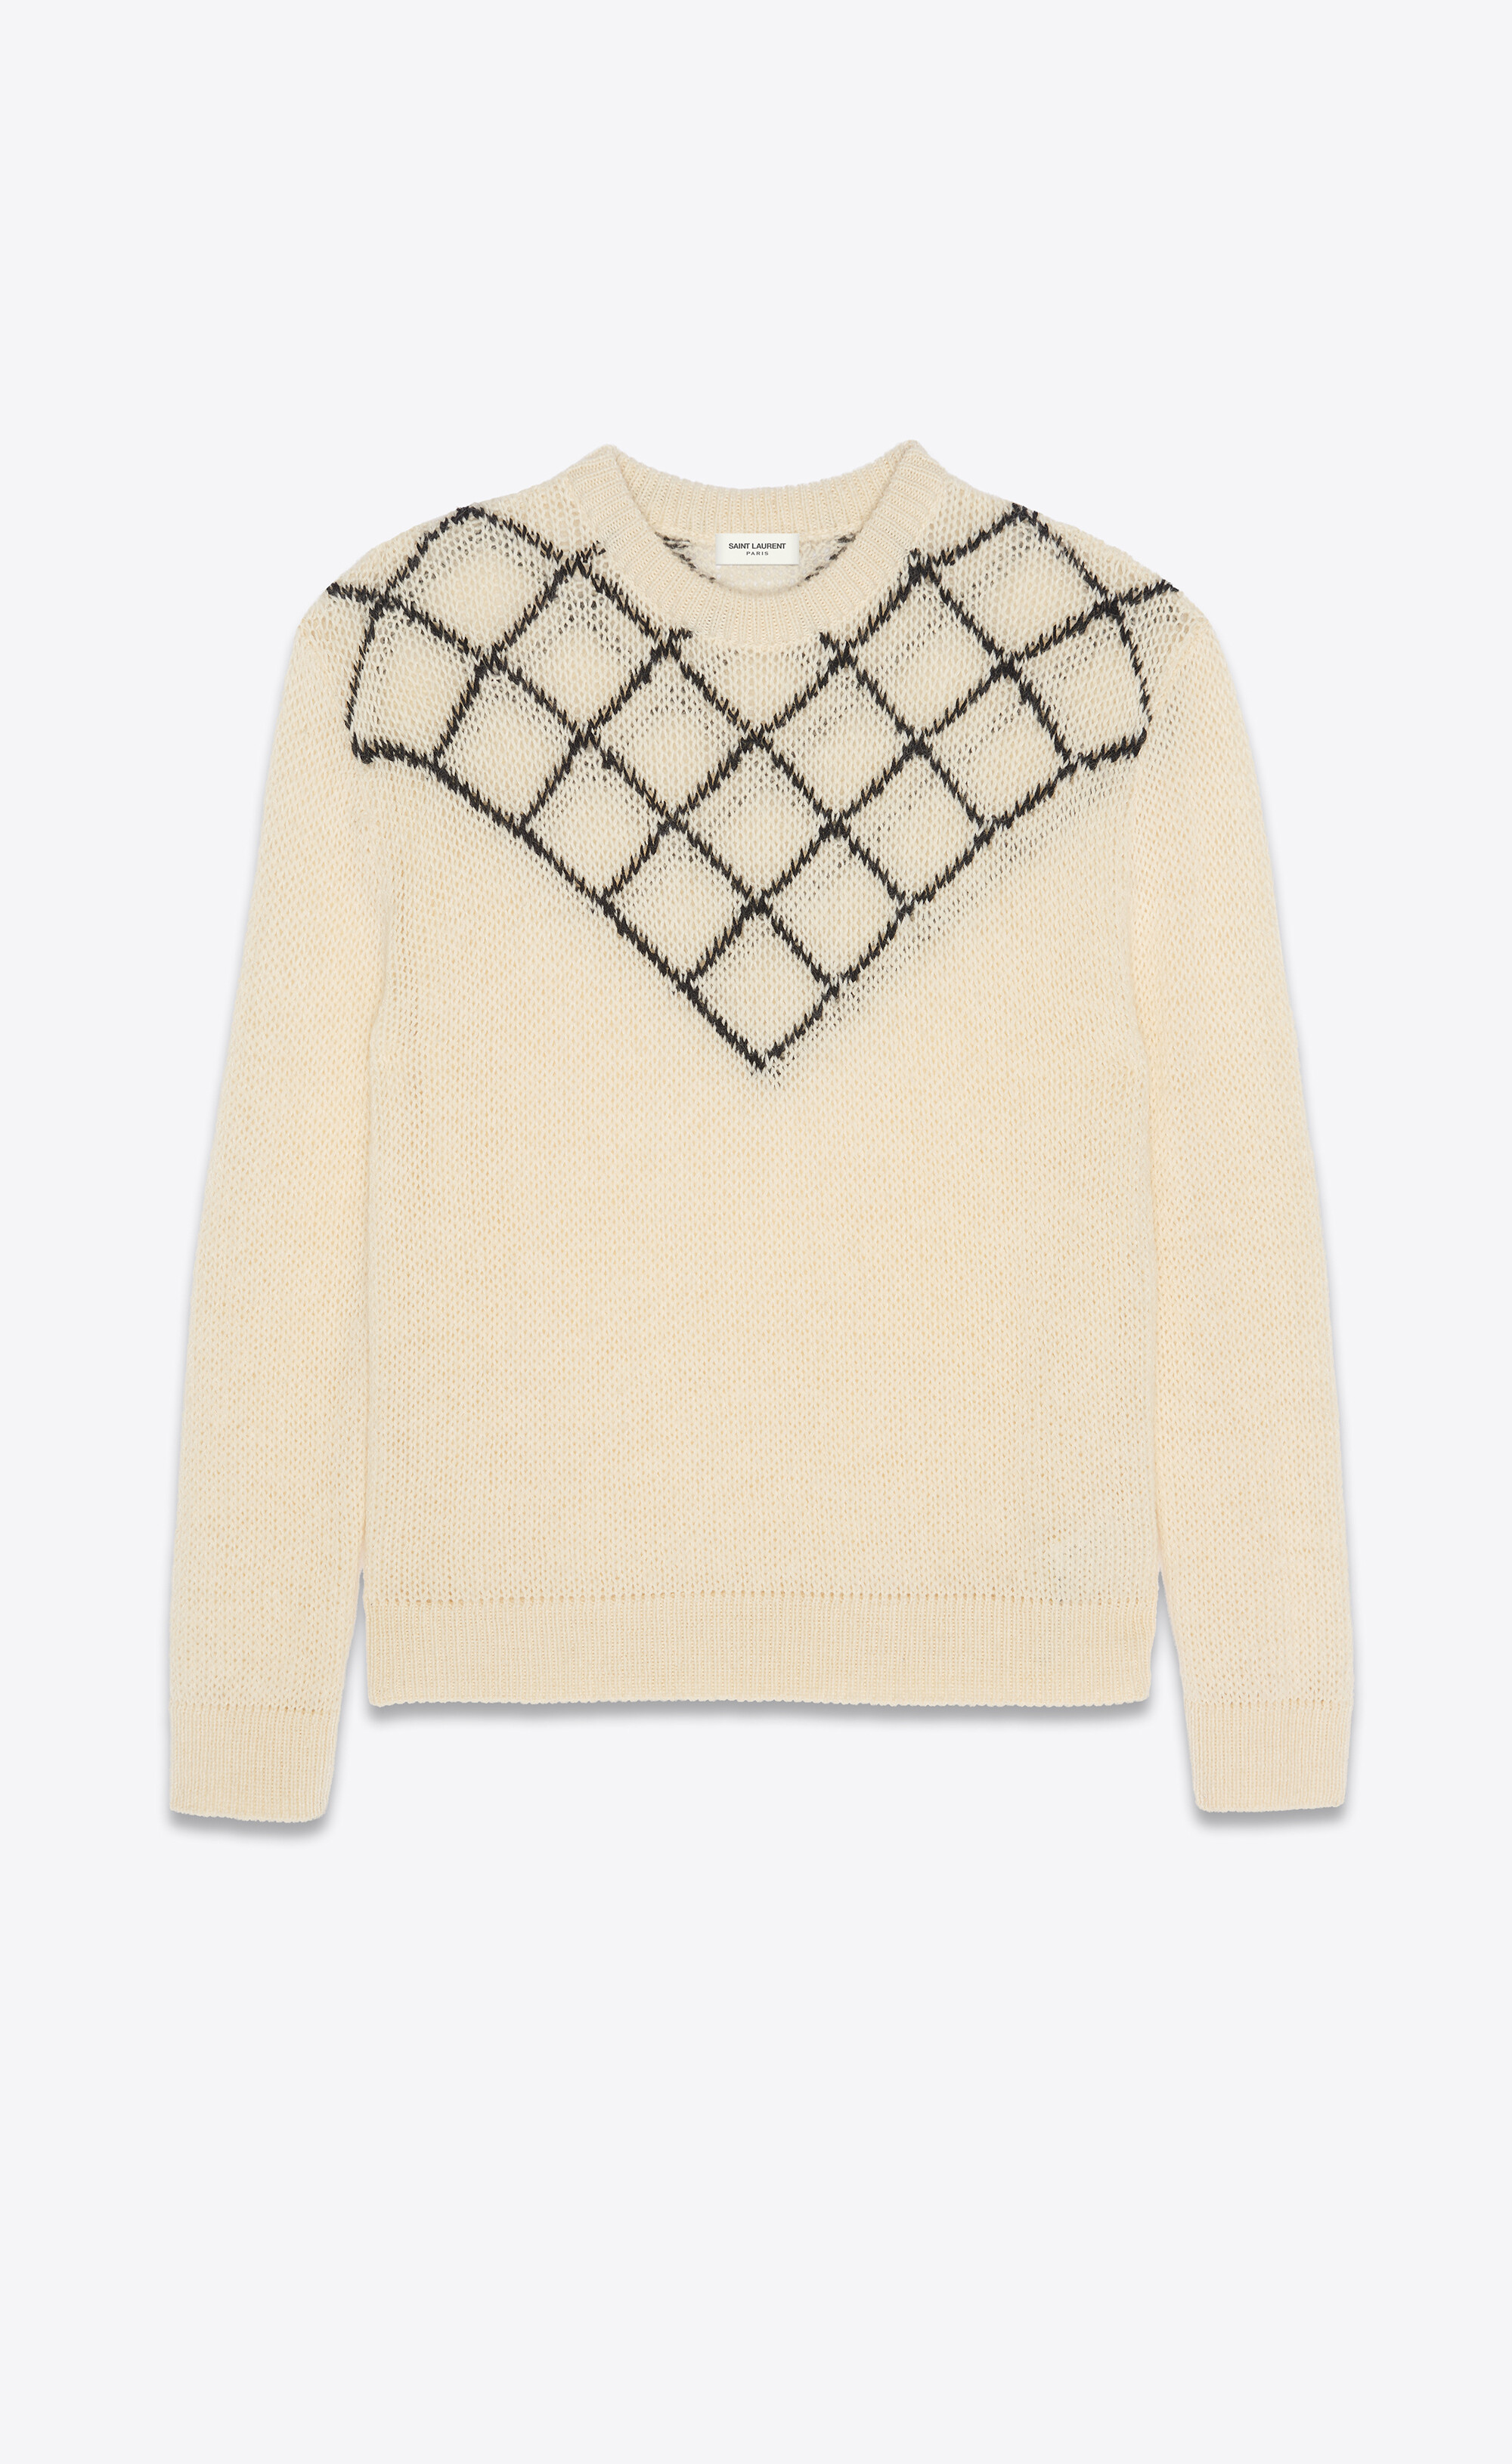 sweater with diamond-patterned bib